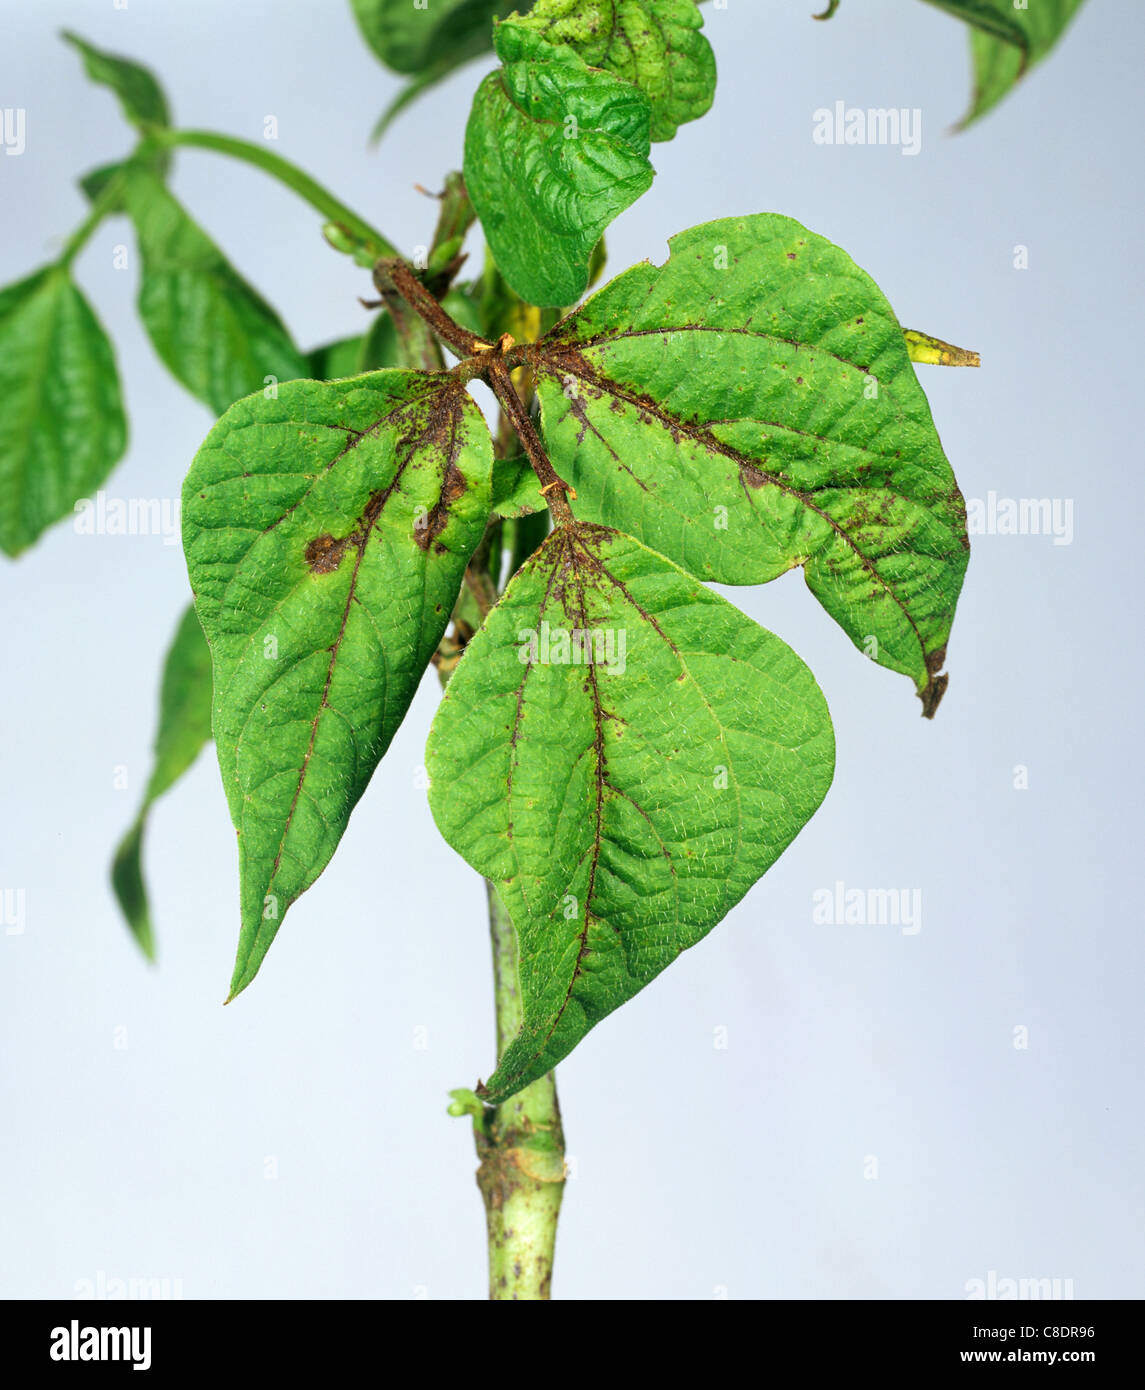 Blattflecken (Ascochyta Bolthauseri) Schaden Nekrose auf grünen Bohnen Blatt Stockfoto